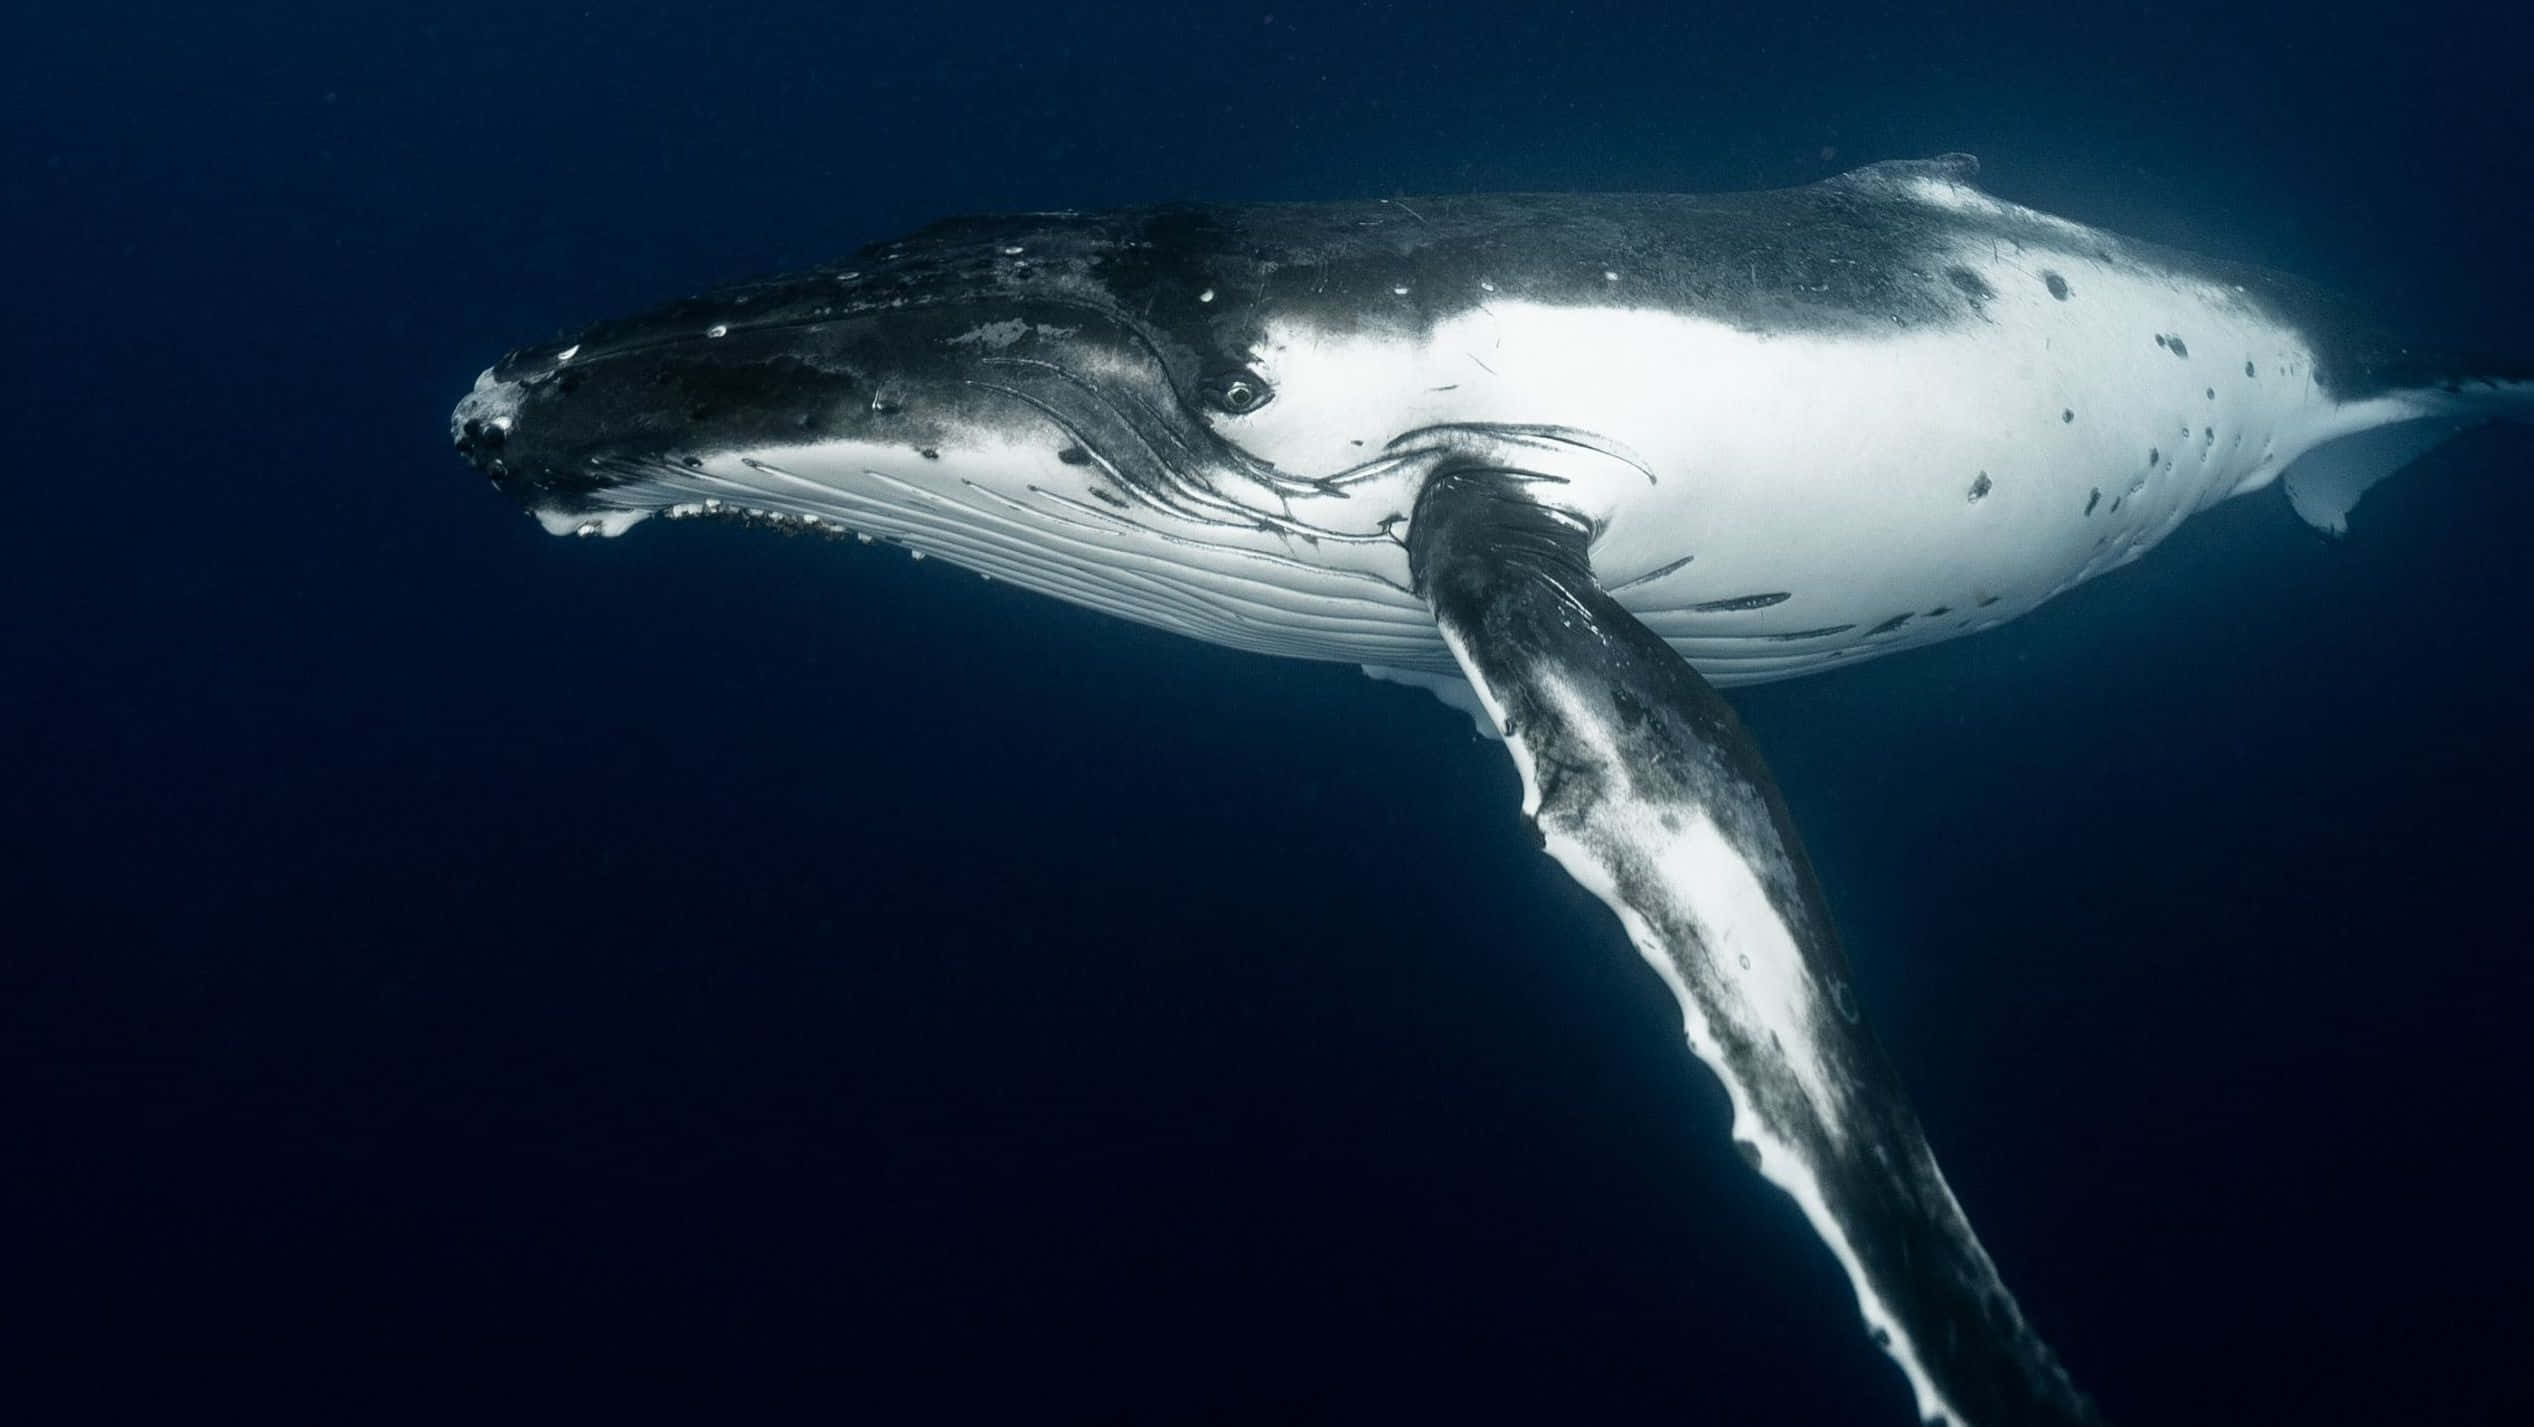 Dark Ocean Whale Picture